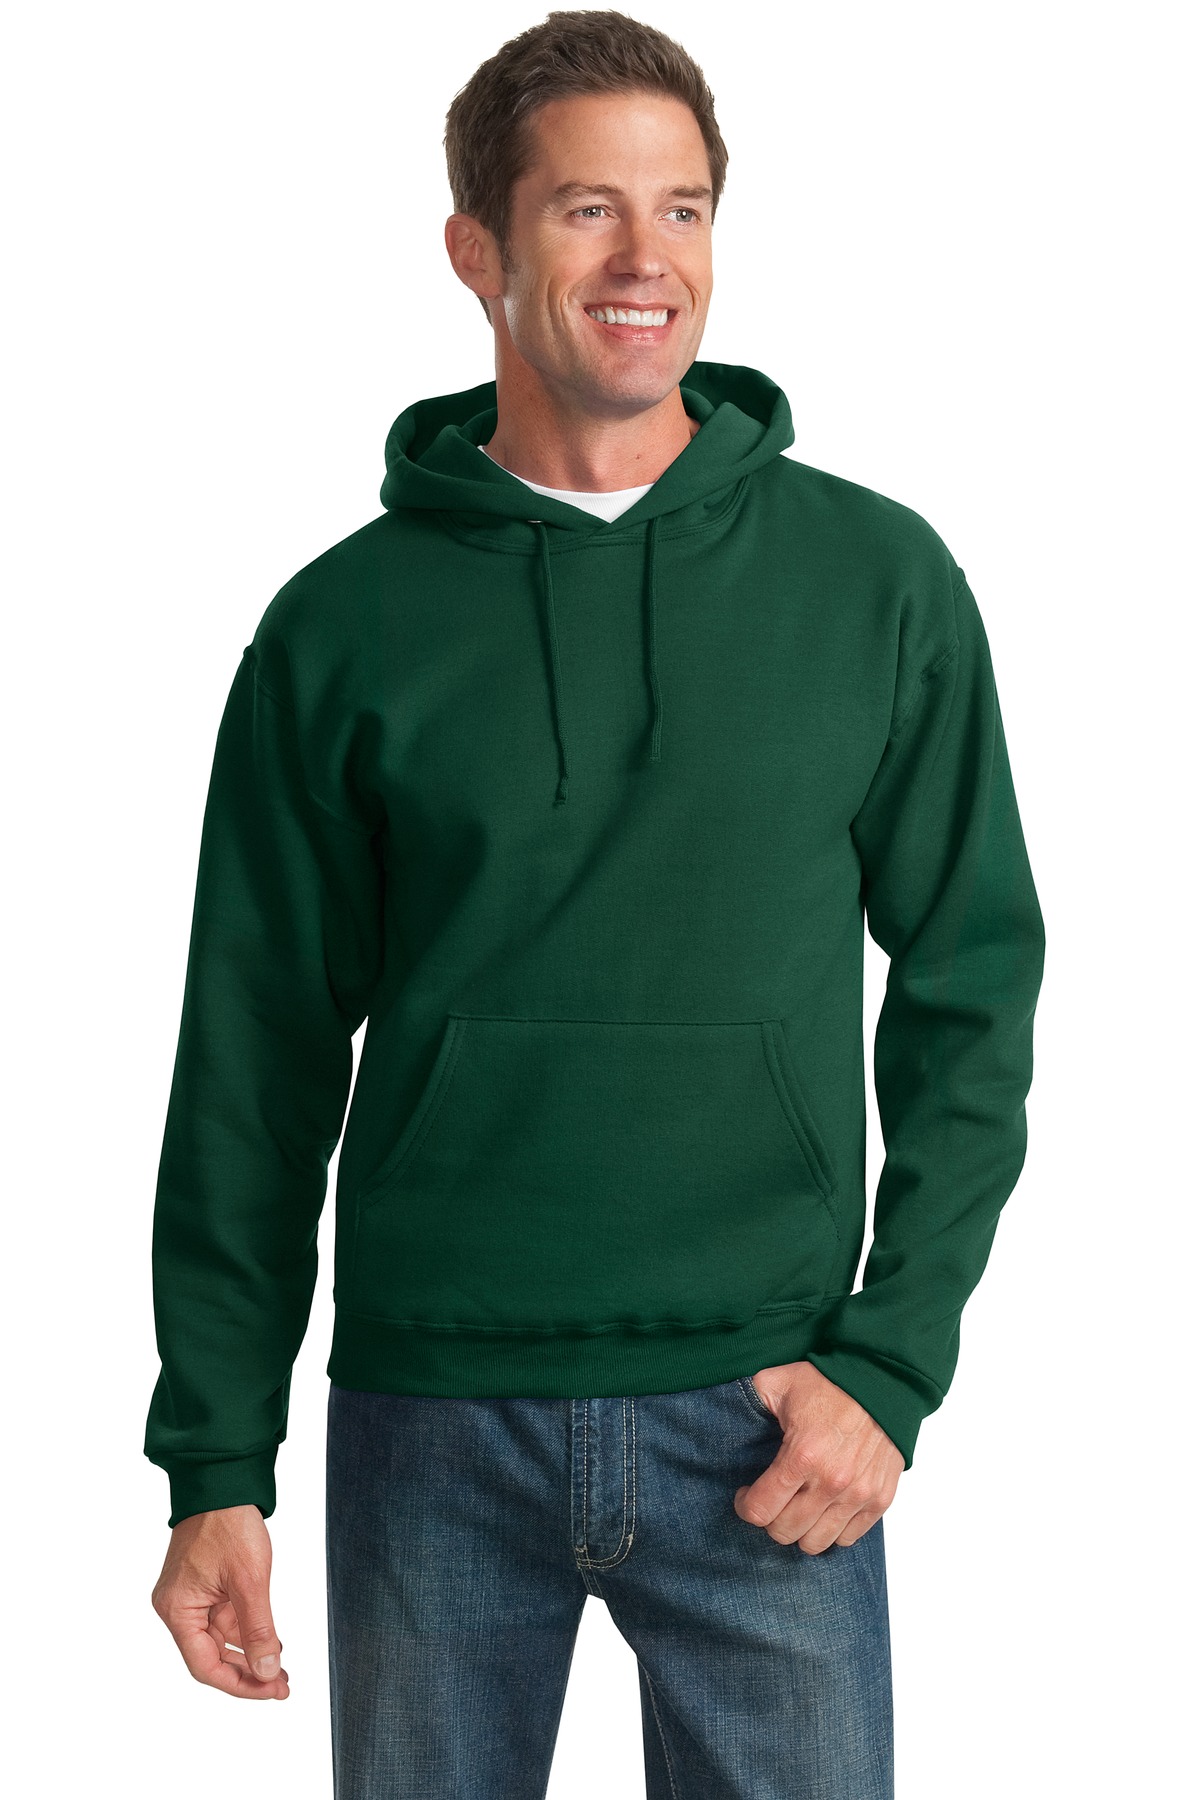 Jerzees® - NuBlend® Pullover Hooded Sweatshirt.-Jerzees